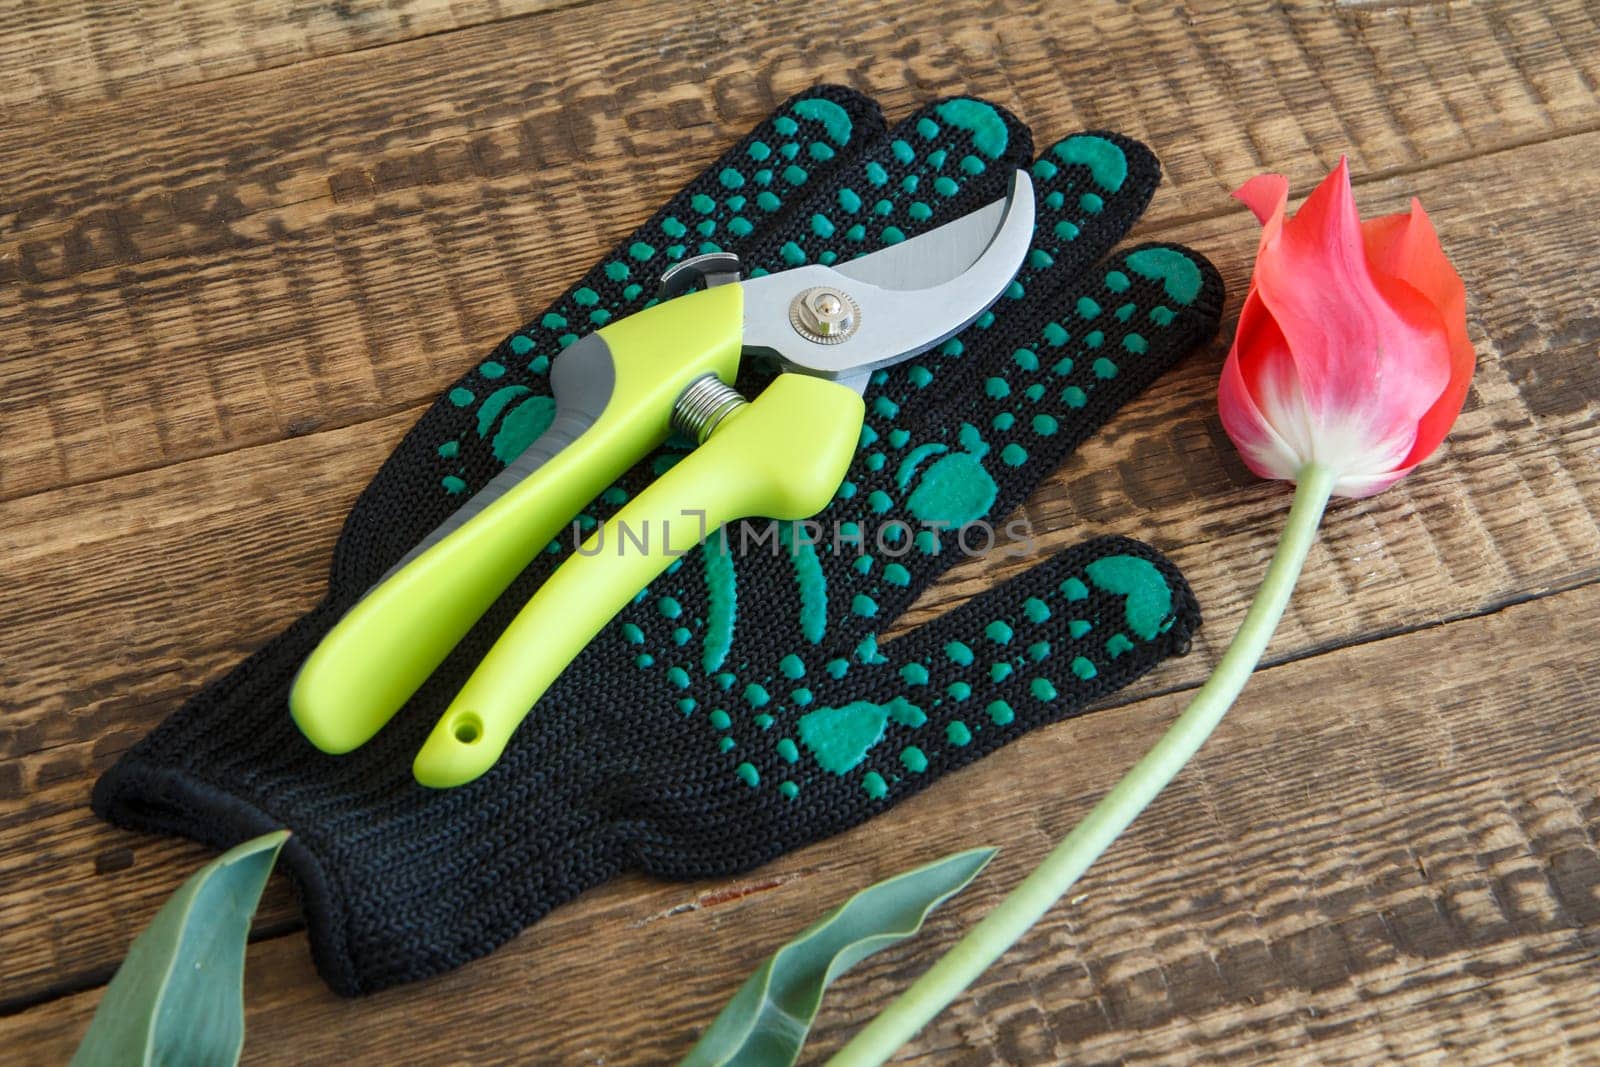 Garden glove, pruner and cut tulip on wooden board. Garden tools and equipment